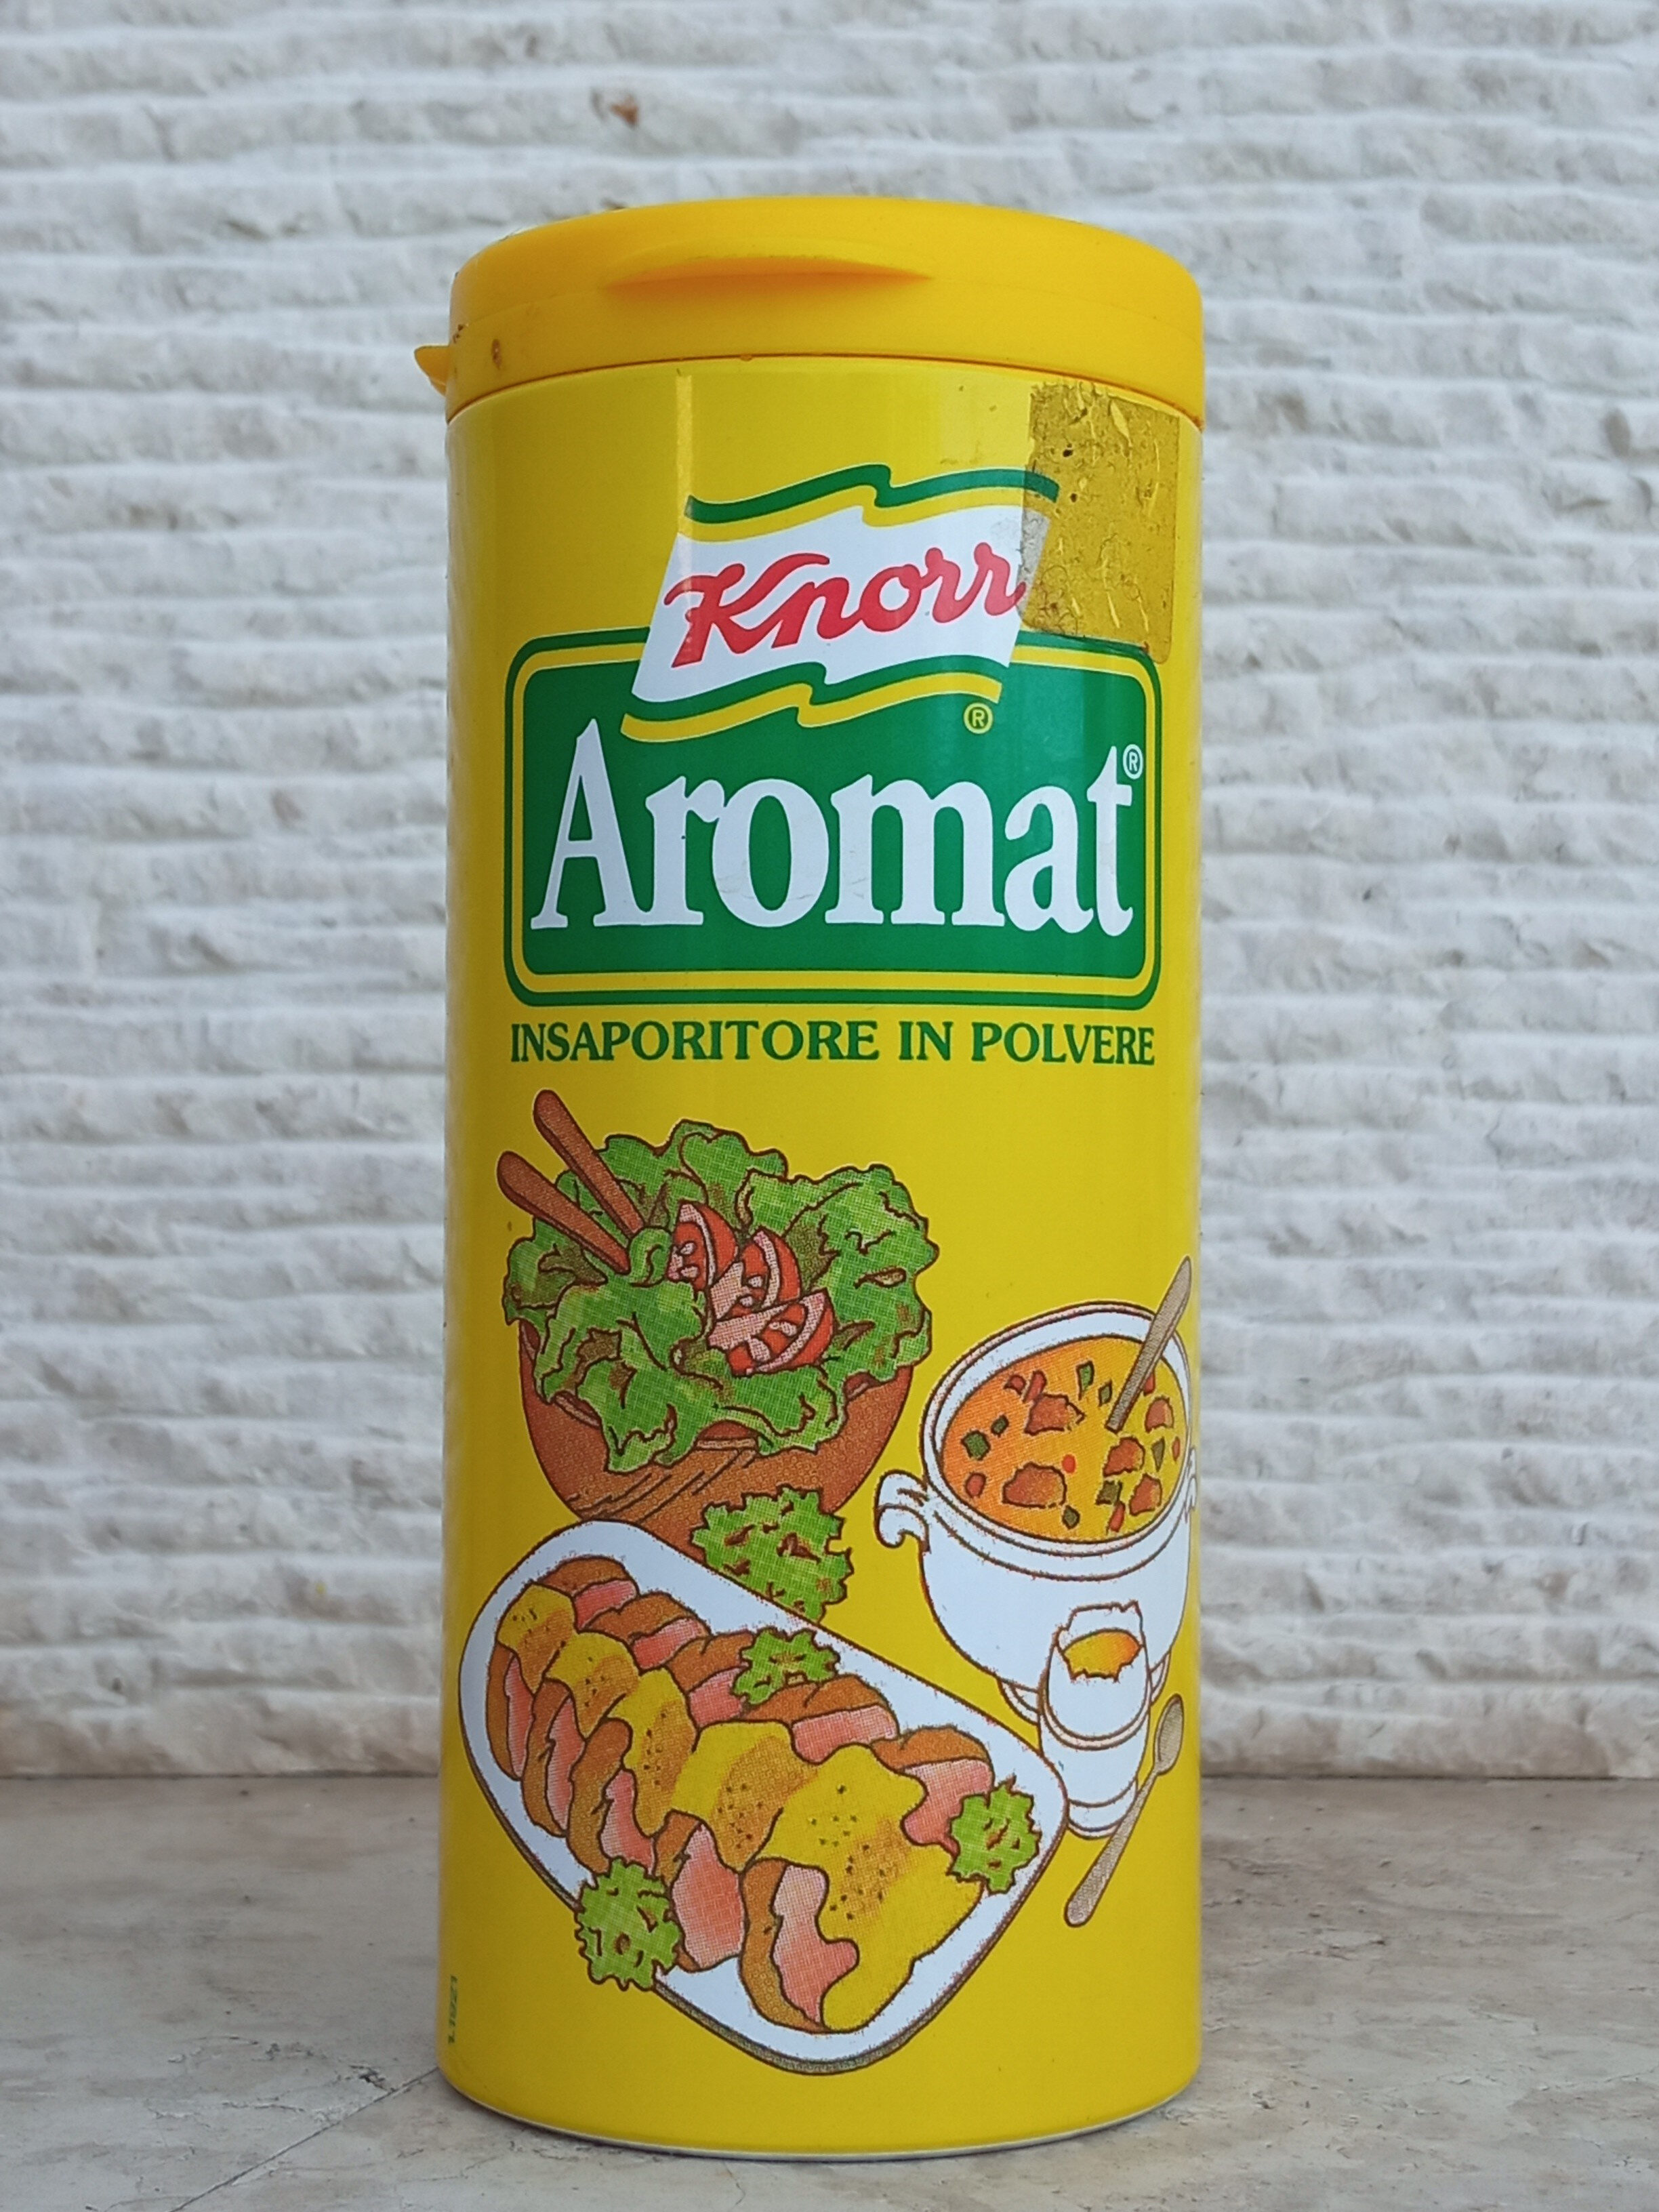 Aromat ® - Produit